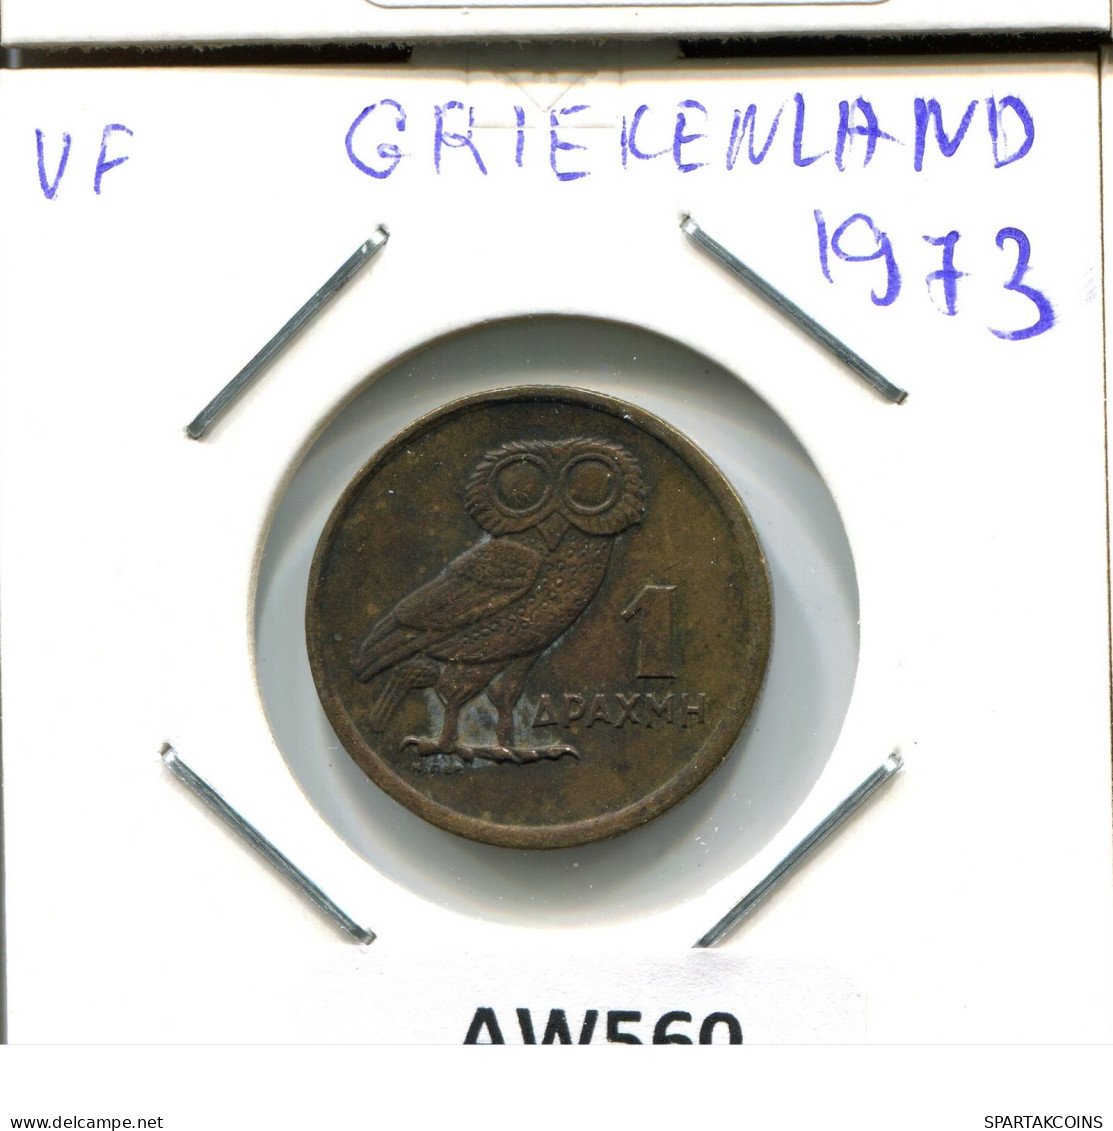 1 DRACHMA 1973 GRECIA GREECE Moneda #AW560.E.A - Grèce